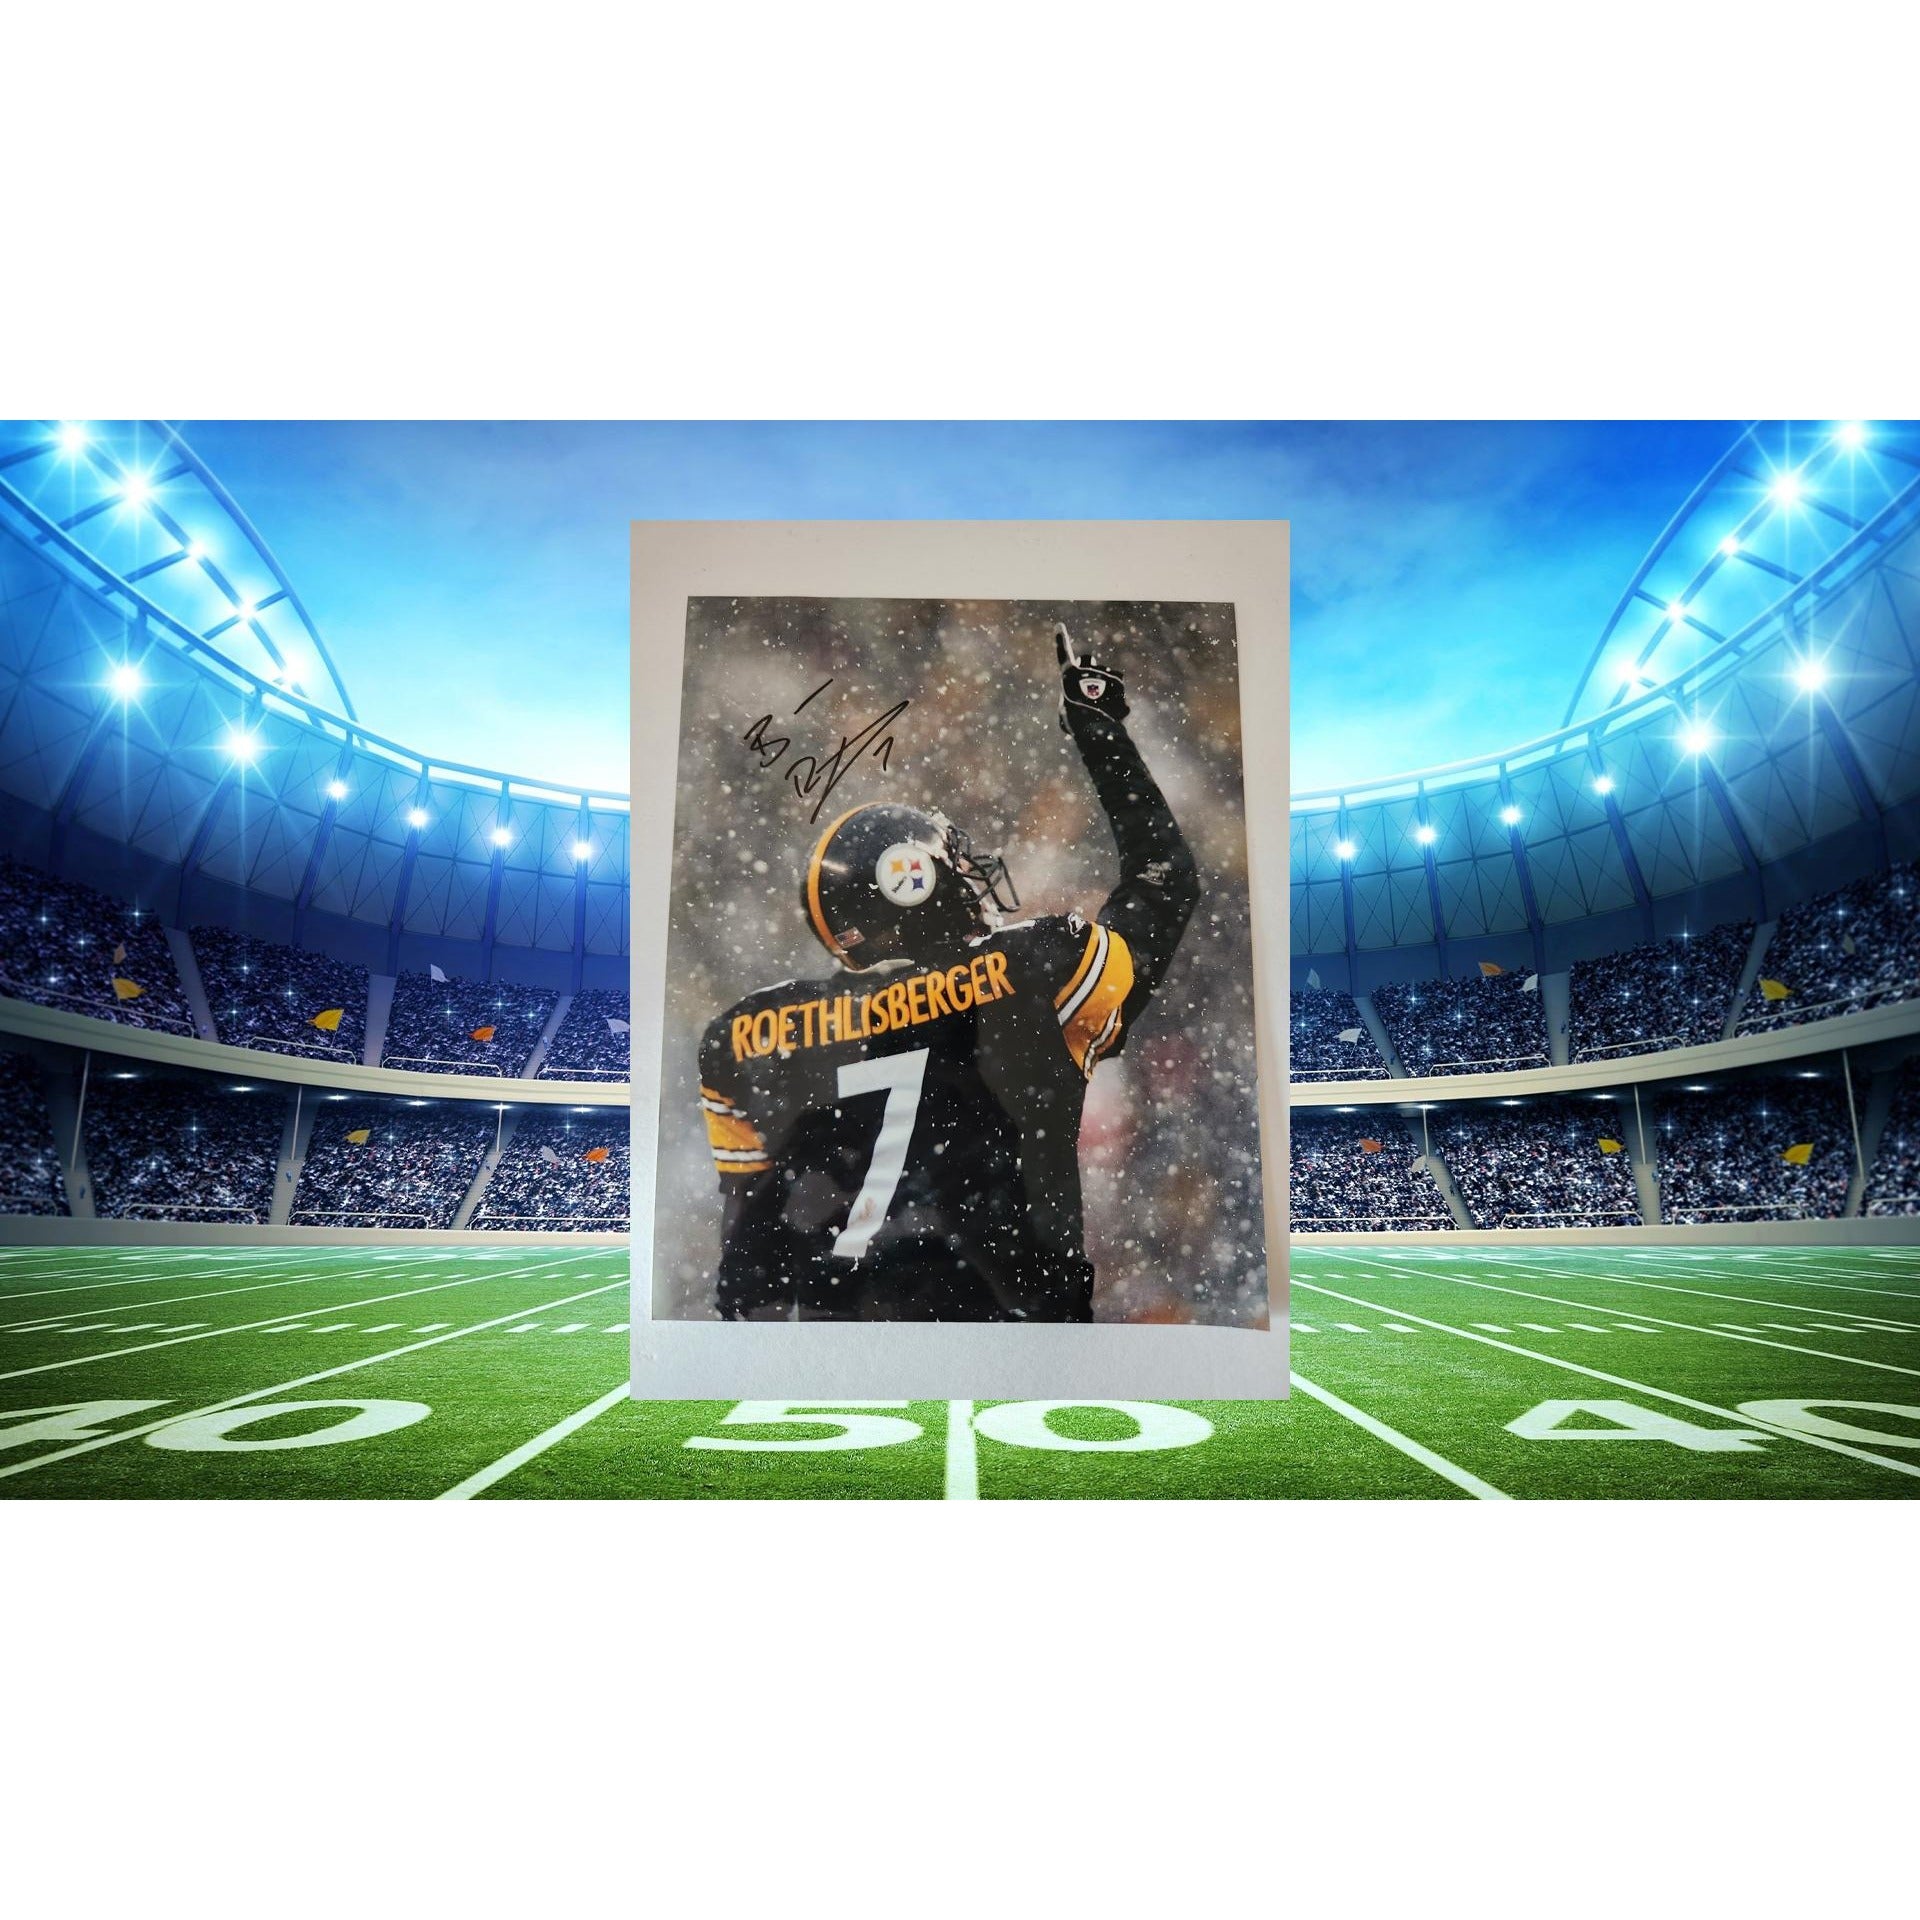 Ben Roethlisberger Pittsburgh Steelers 8x10 photo signed